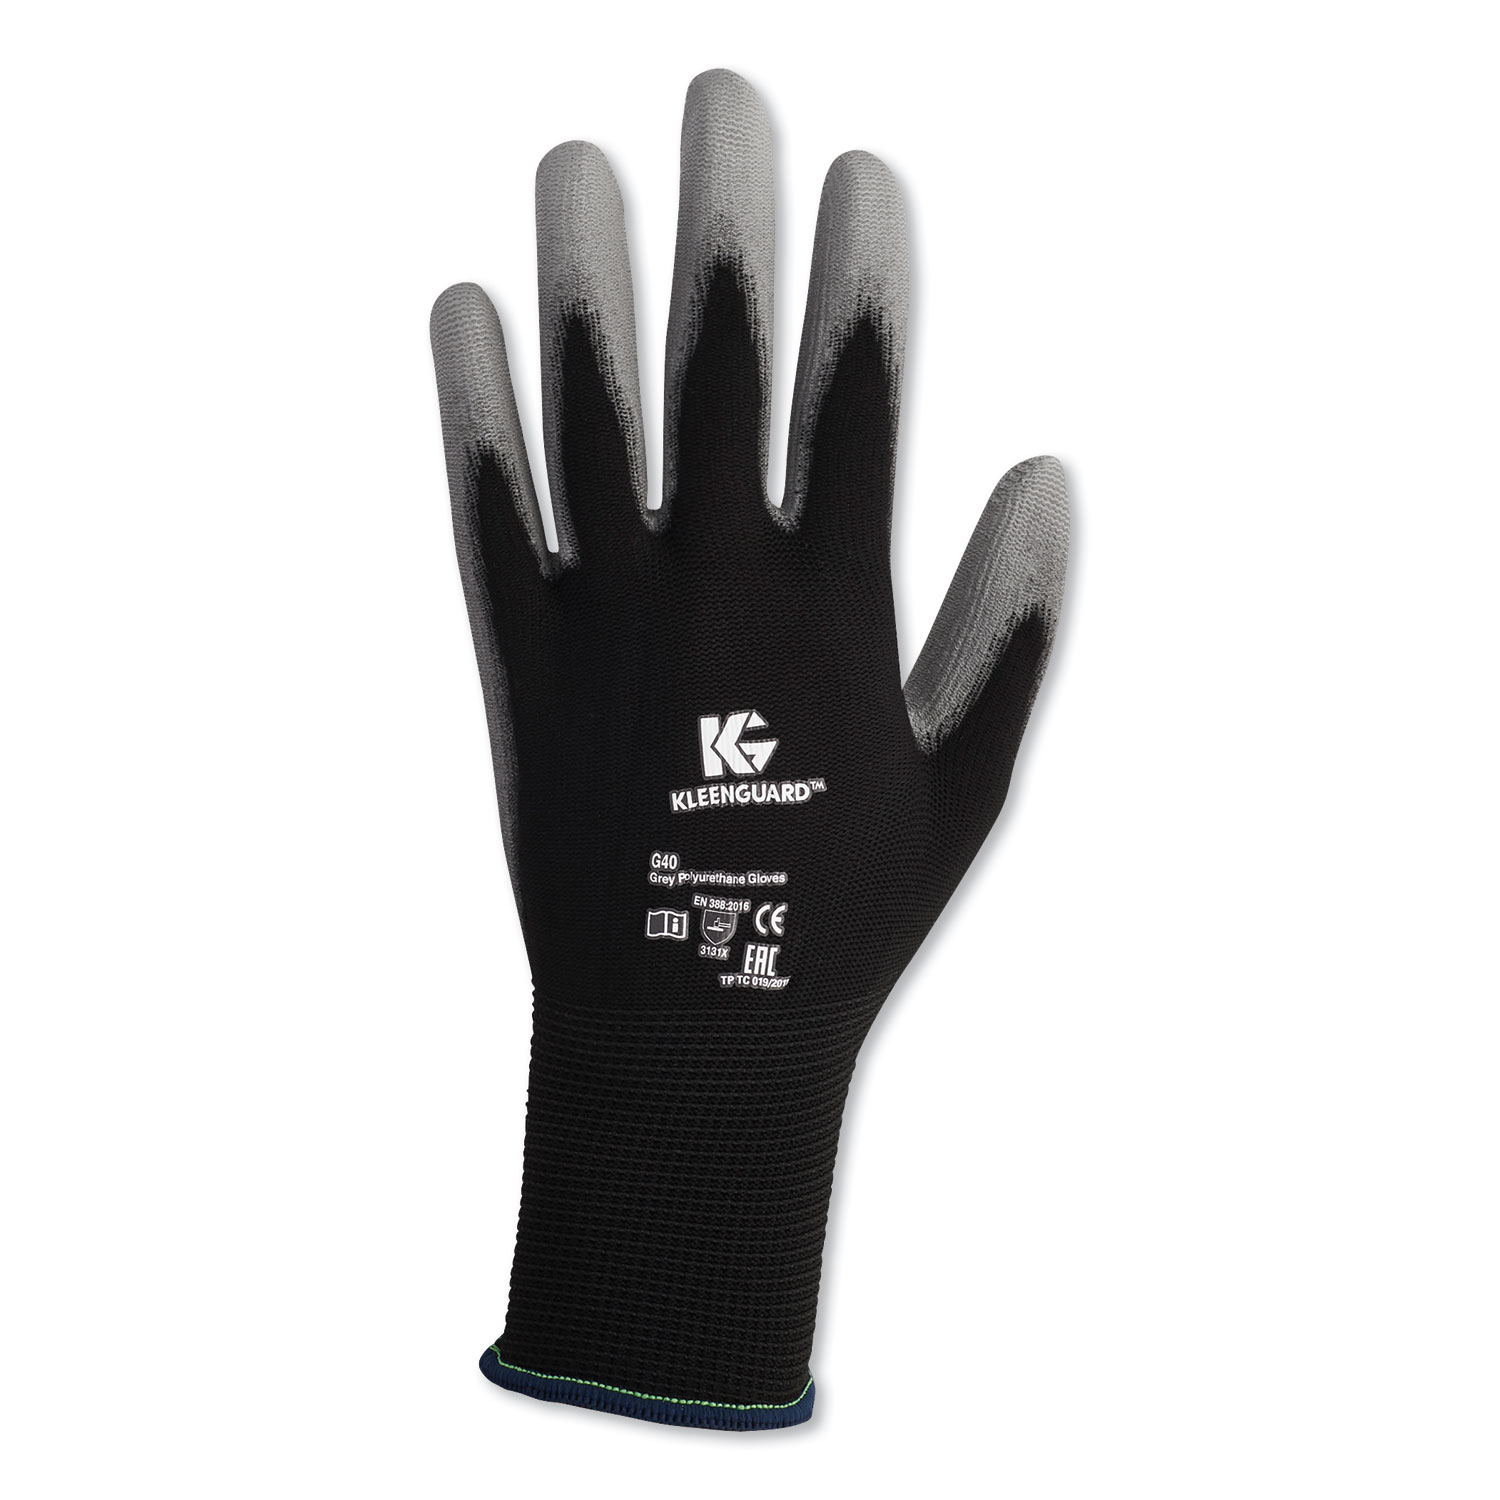  KleenGuard 38729 G40 Polyurethane Coated Gloves, 250 mm Length, XL/Size 10, Blk/Gray, 60 Pairs (KCC38729) 